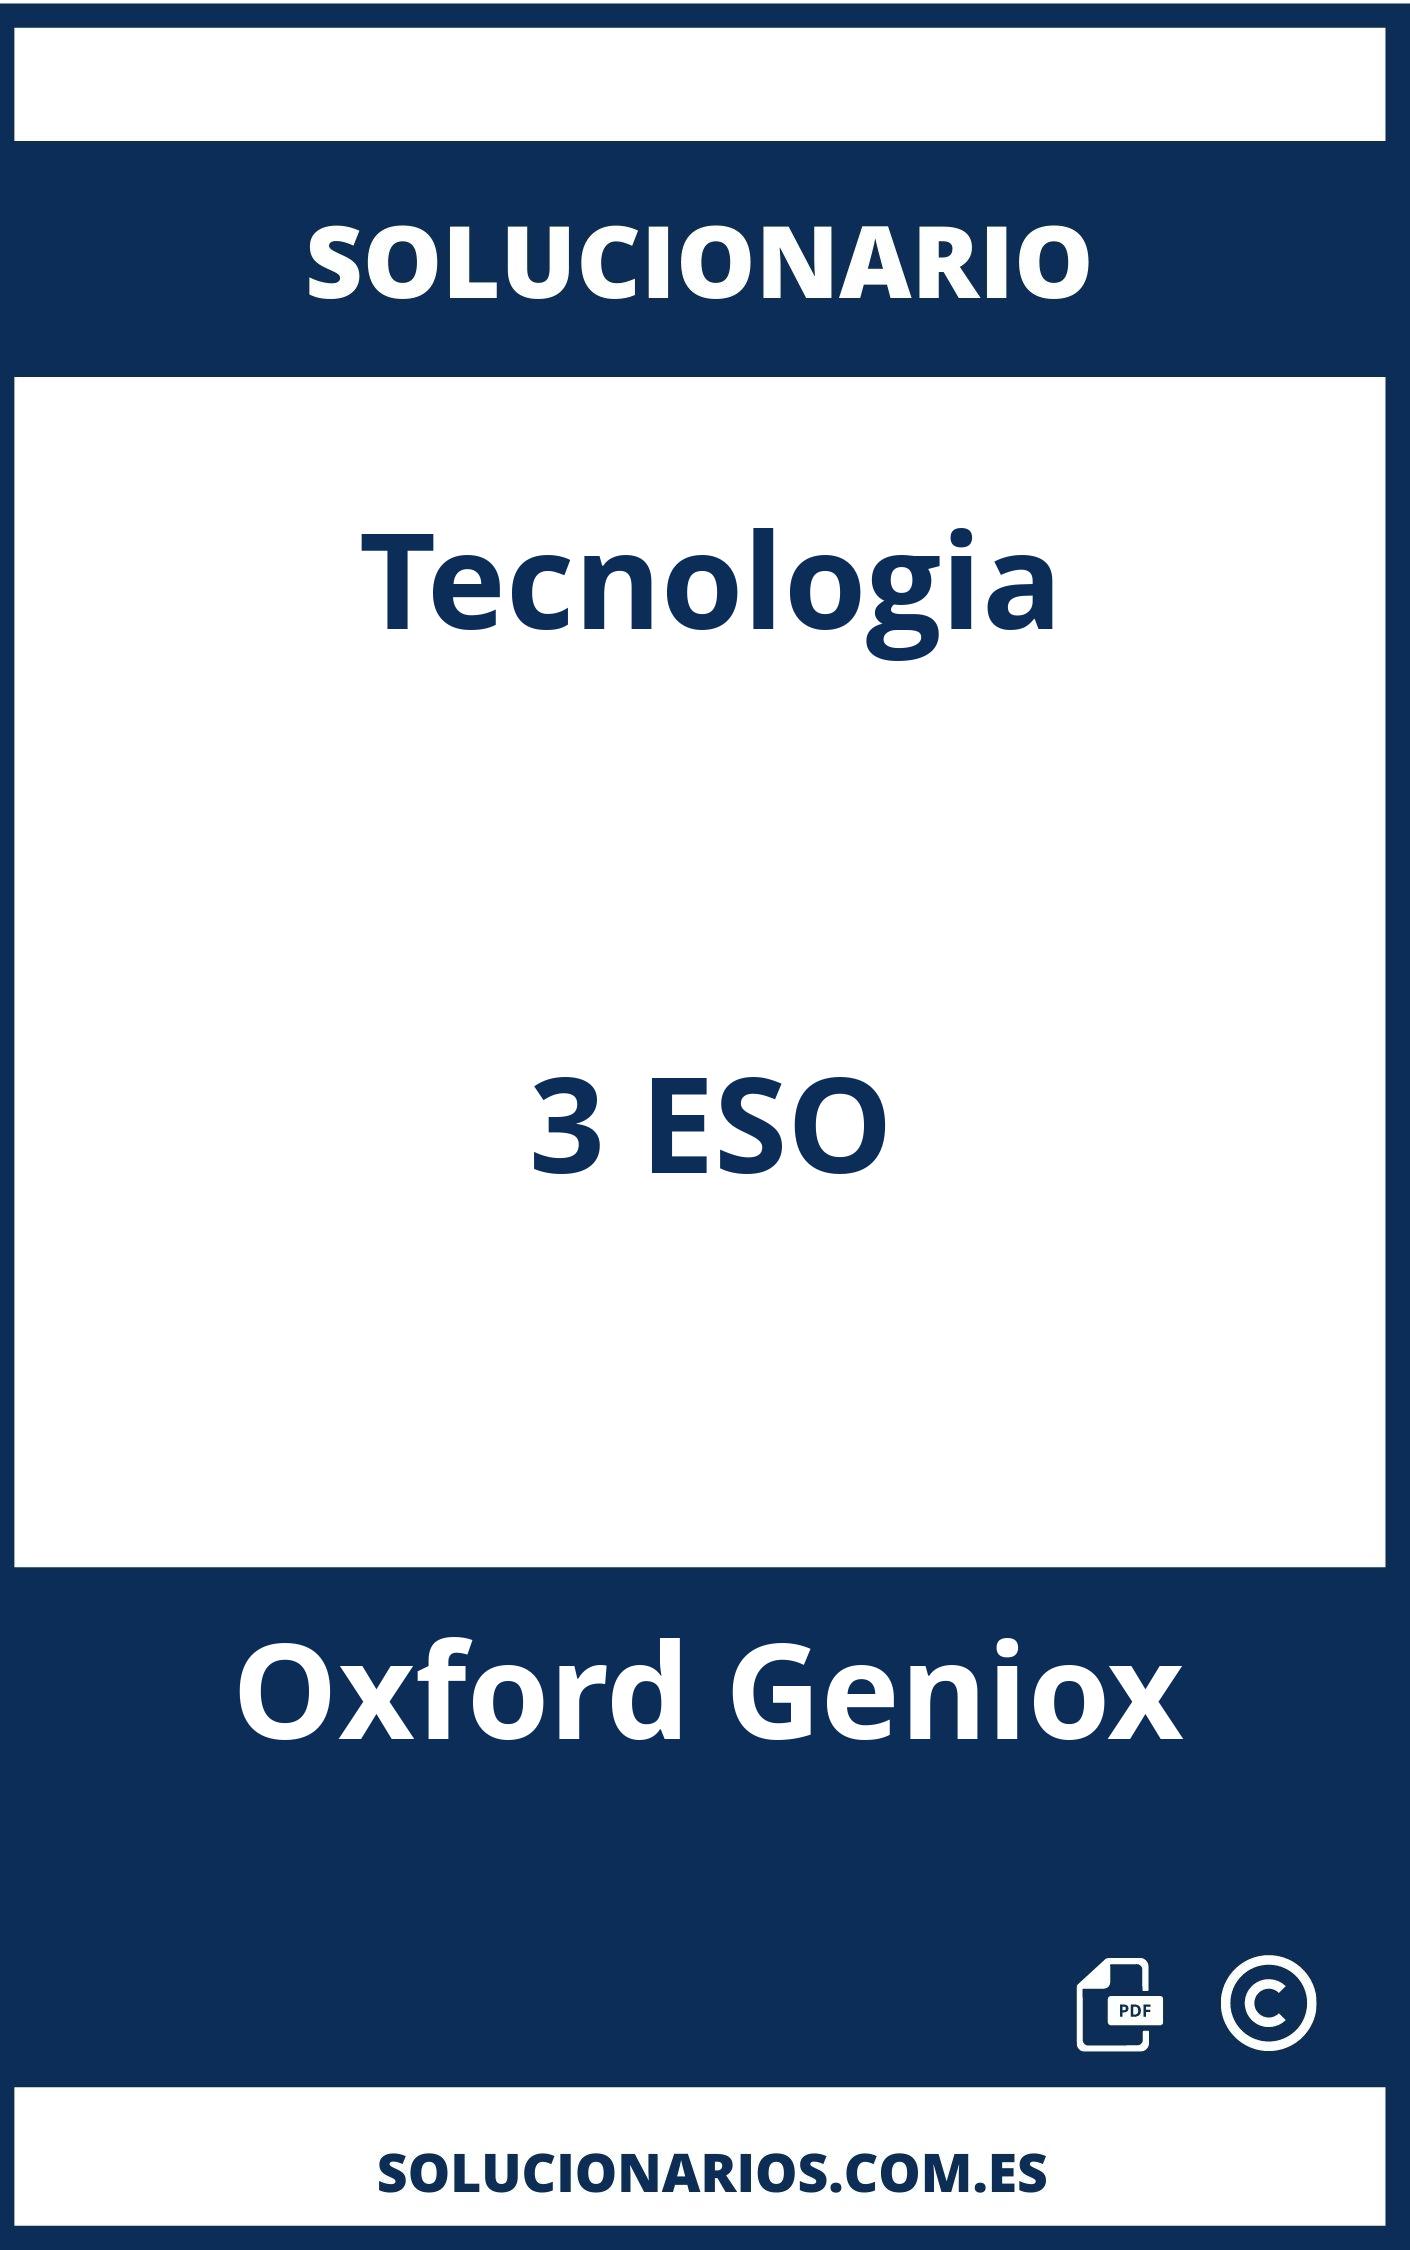 Solucionario Tecnologia 3 ESO Oxford Geniox